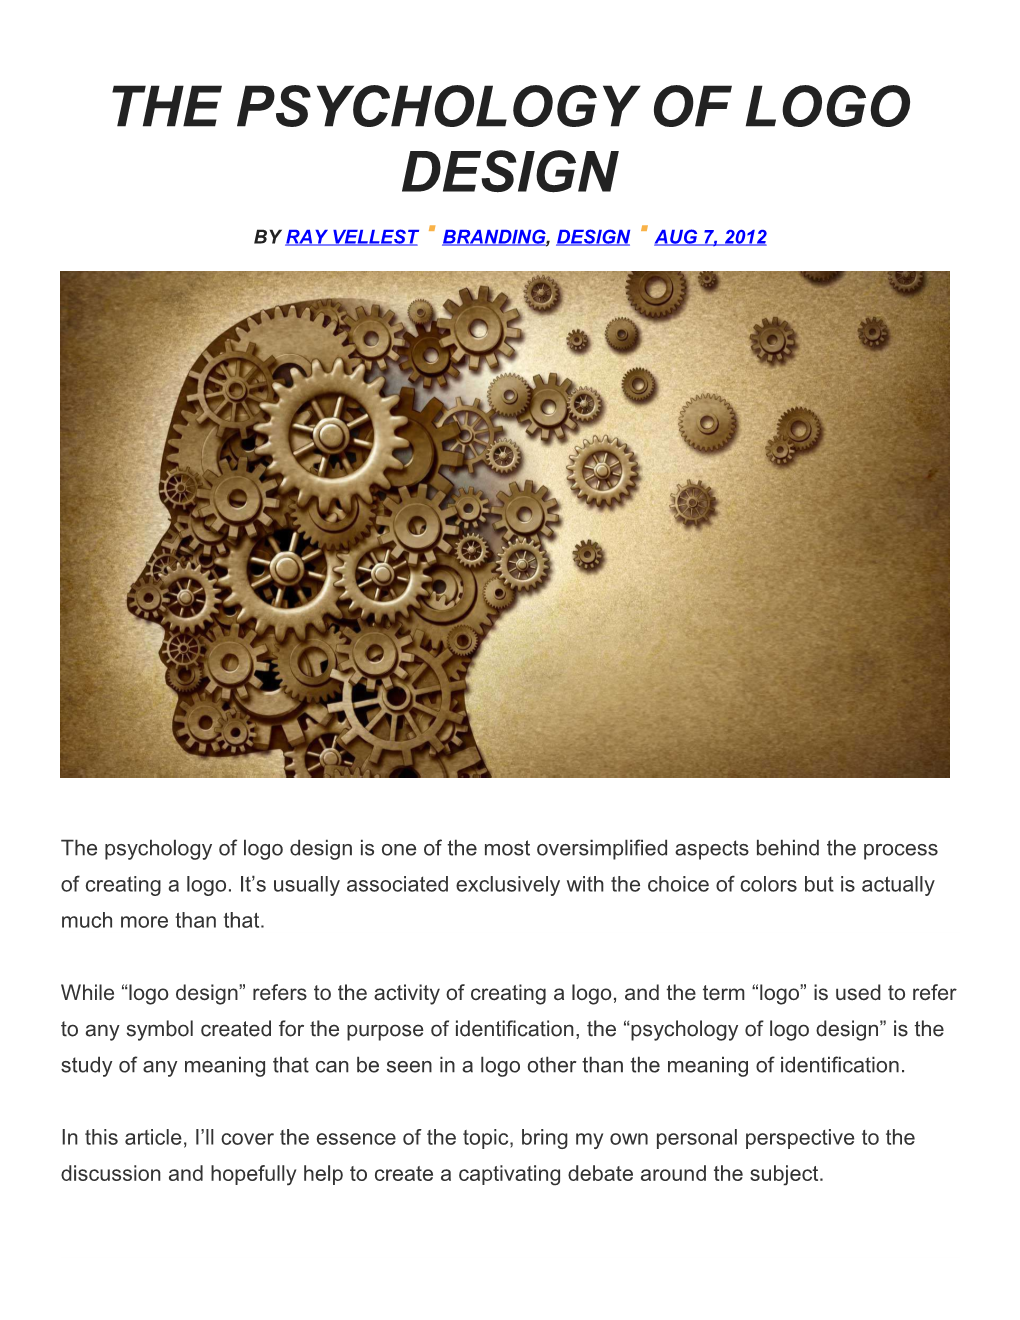 The Psychology of Logo Design